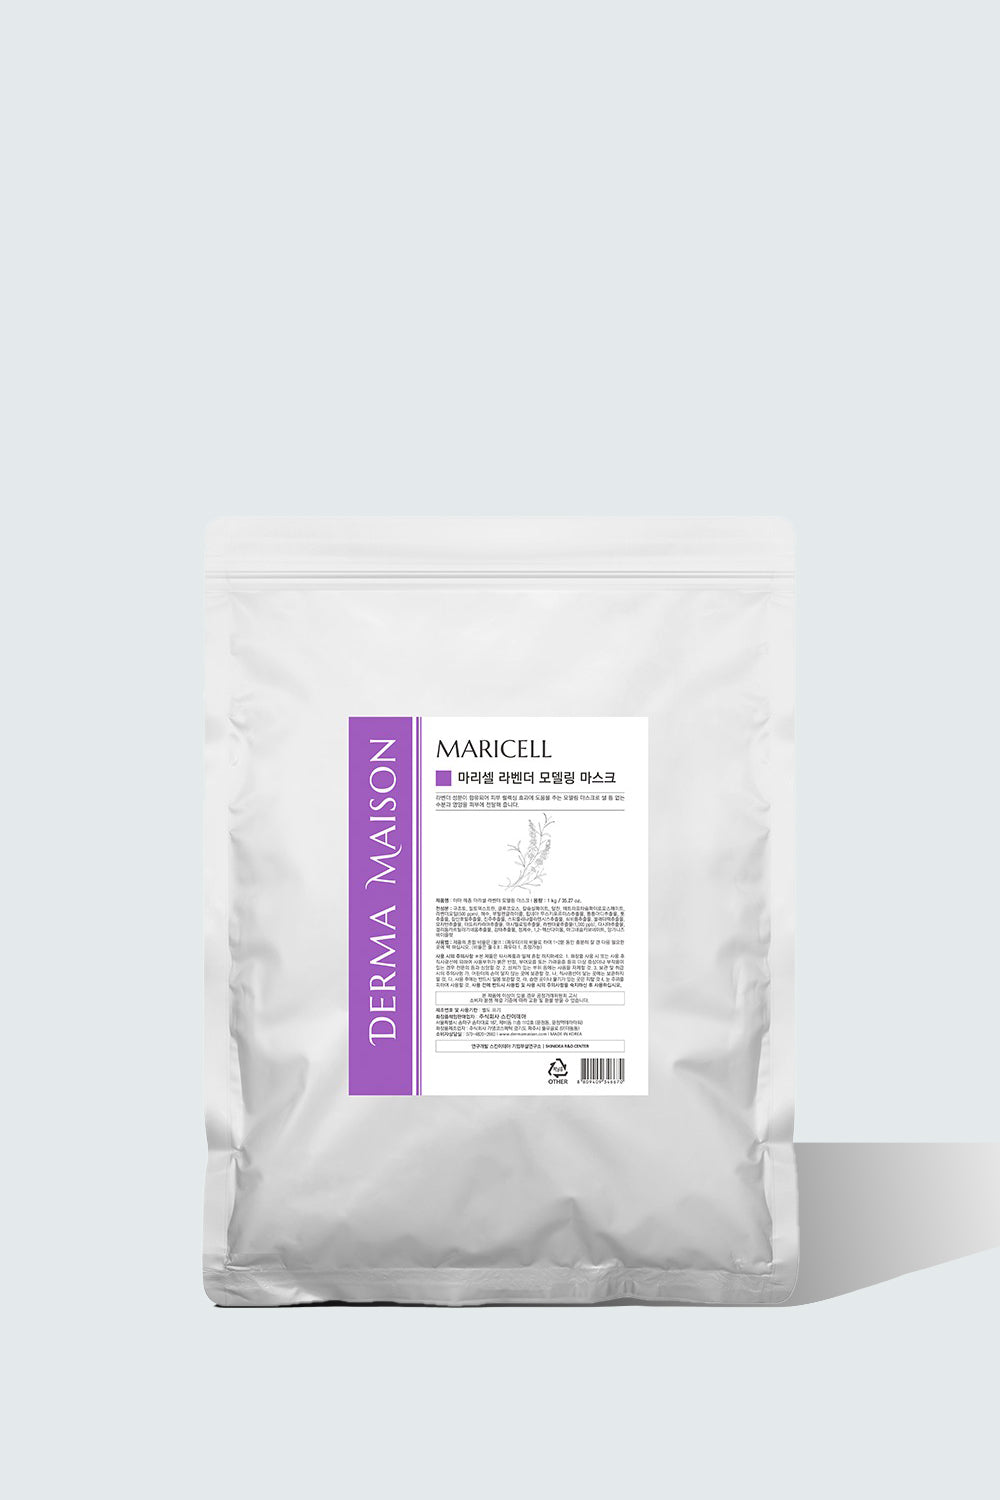 Maricell Lavender Modeling Pack - 1kg DERMA MAISON